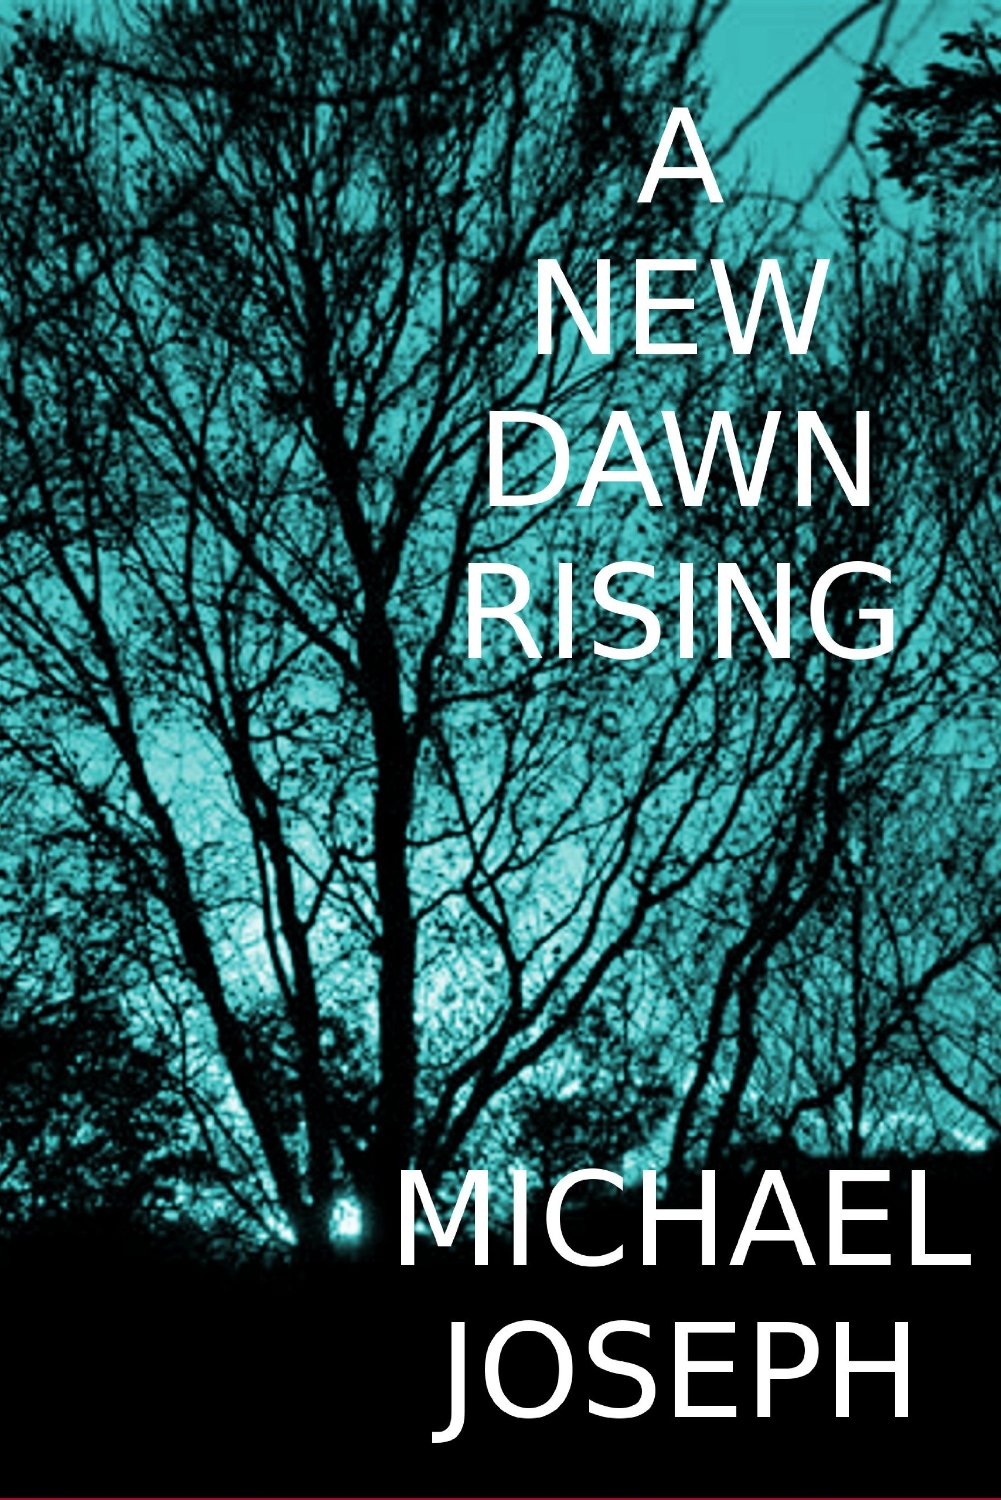 A New Dawn Rising by Michael Joseph